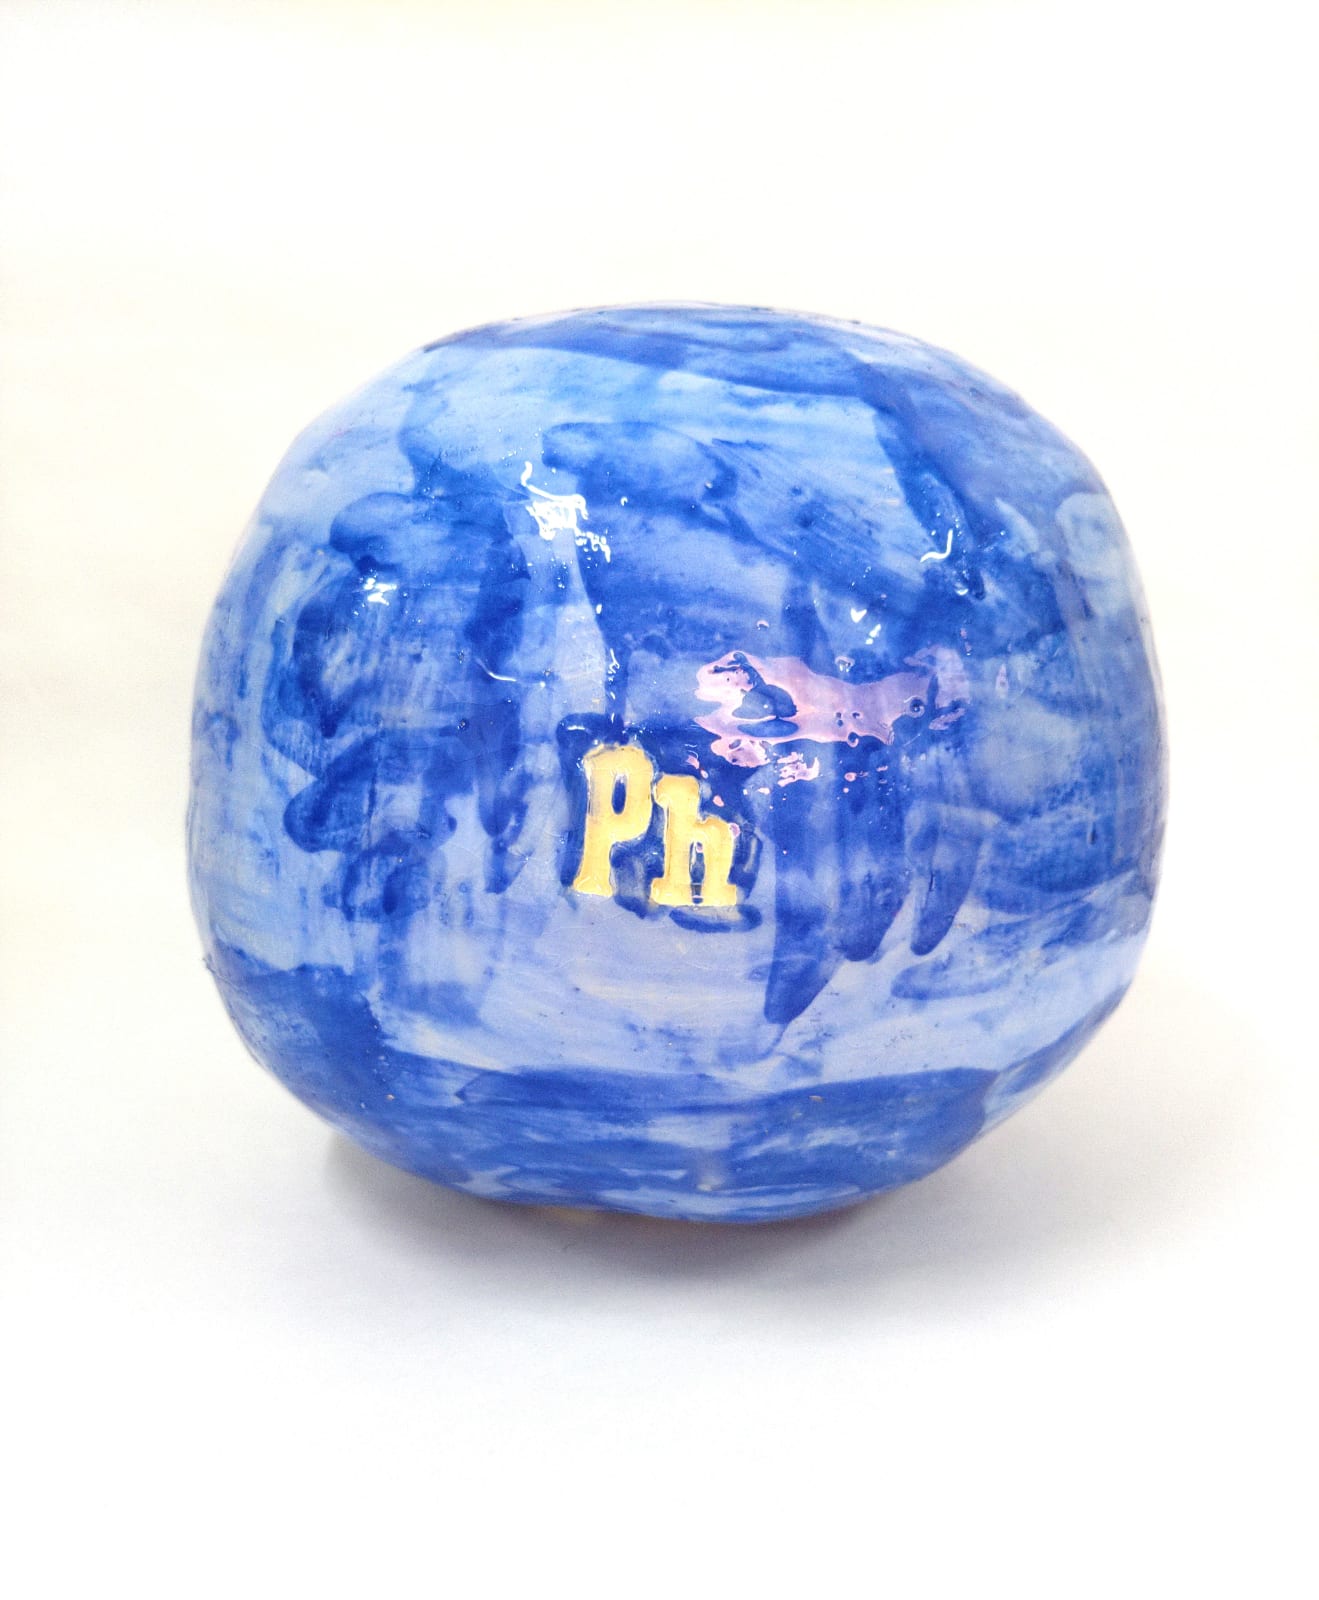 Polly Huyghe, Beach Ball (extra large, blue), 2021 - 2022